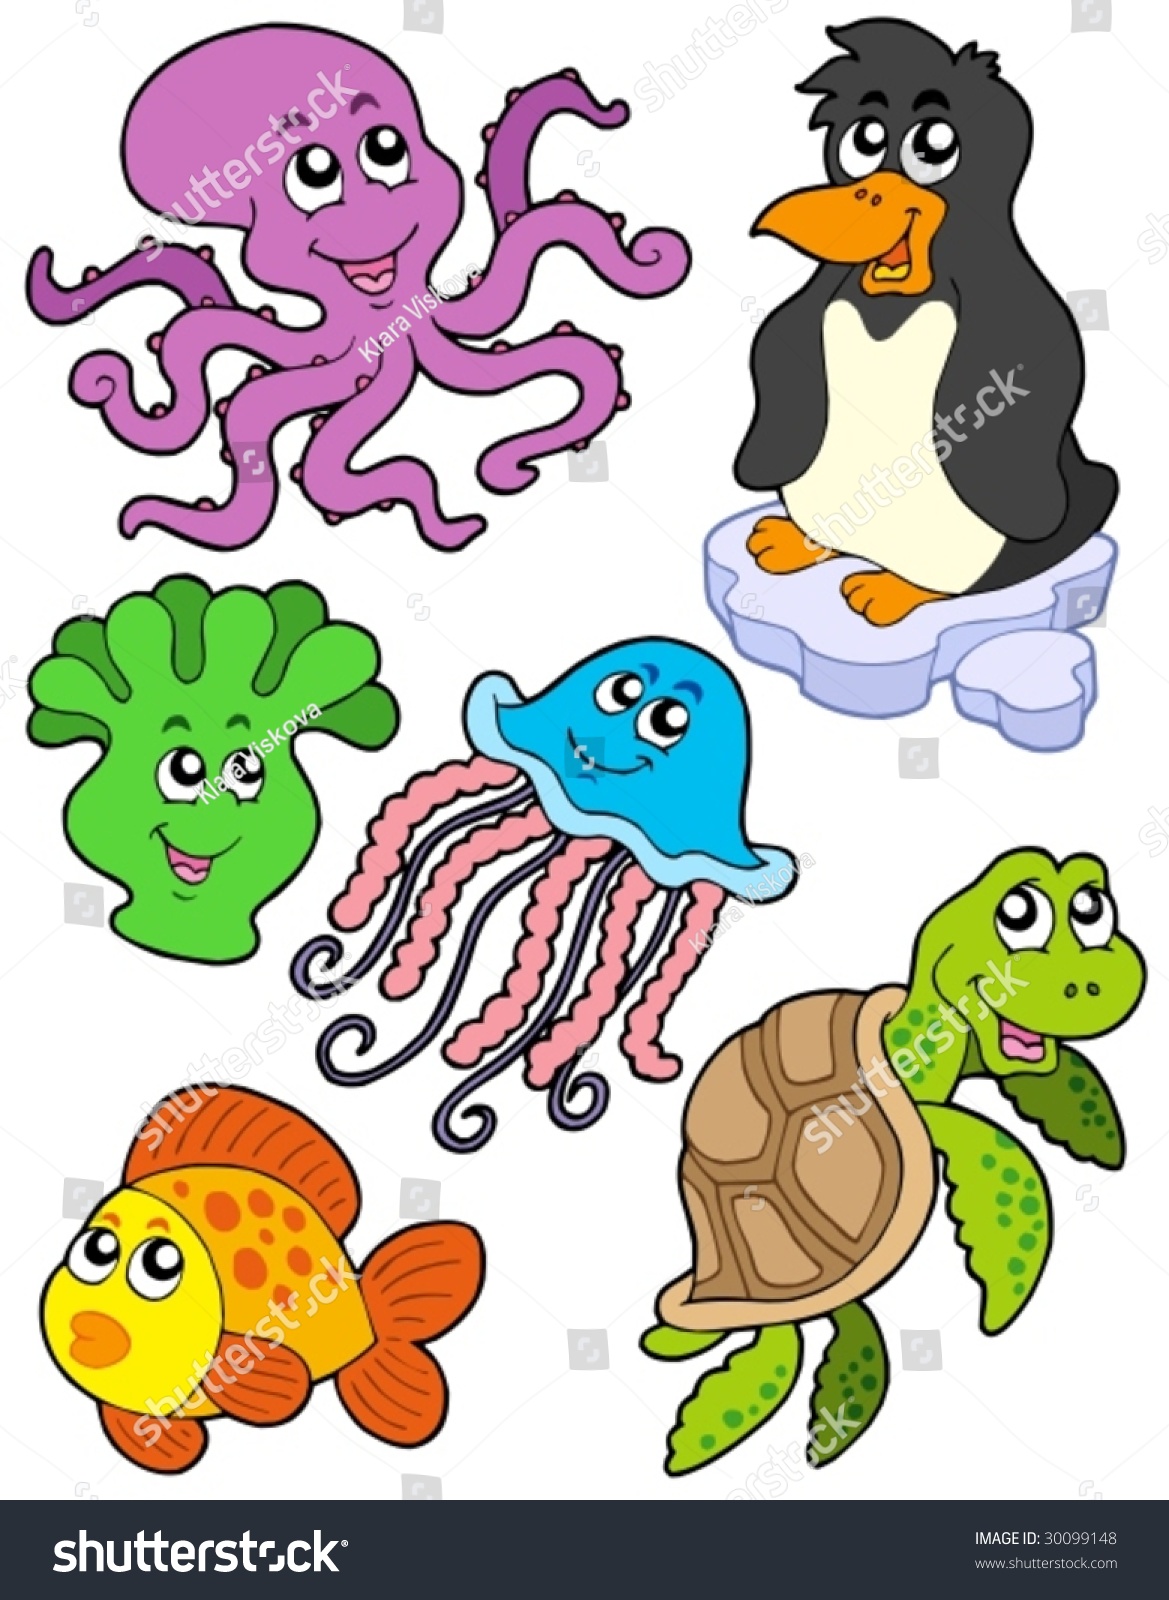 Aquatic Animals Collection 2 - Vector Illustration. - 30099148